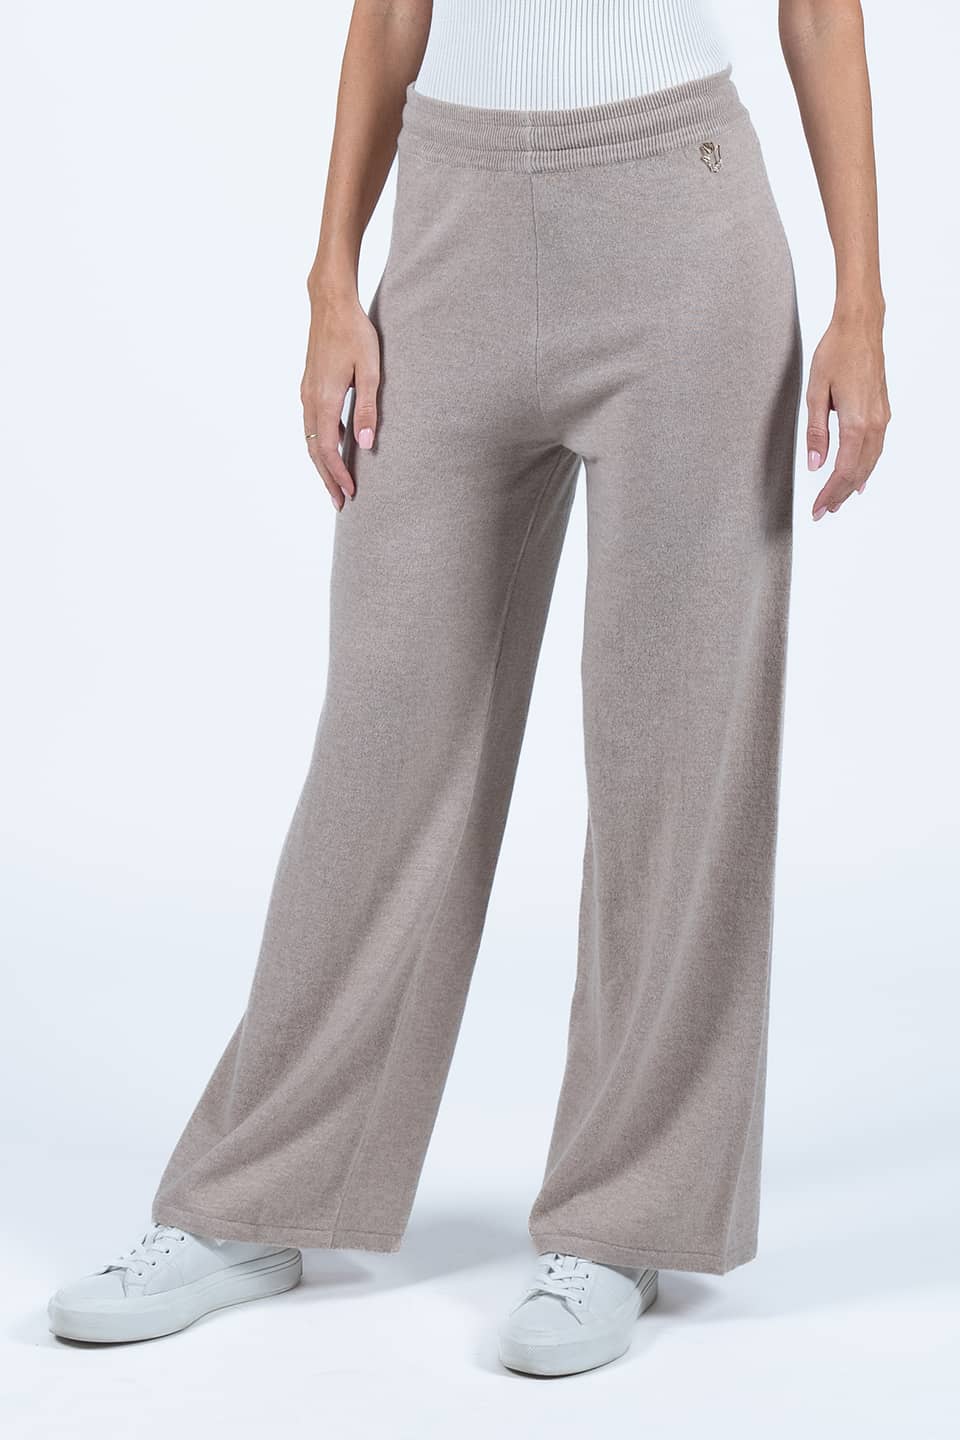 Shop online trendy Beige Women pants from Vivetta Fashion designer. Product gallery 1